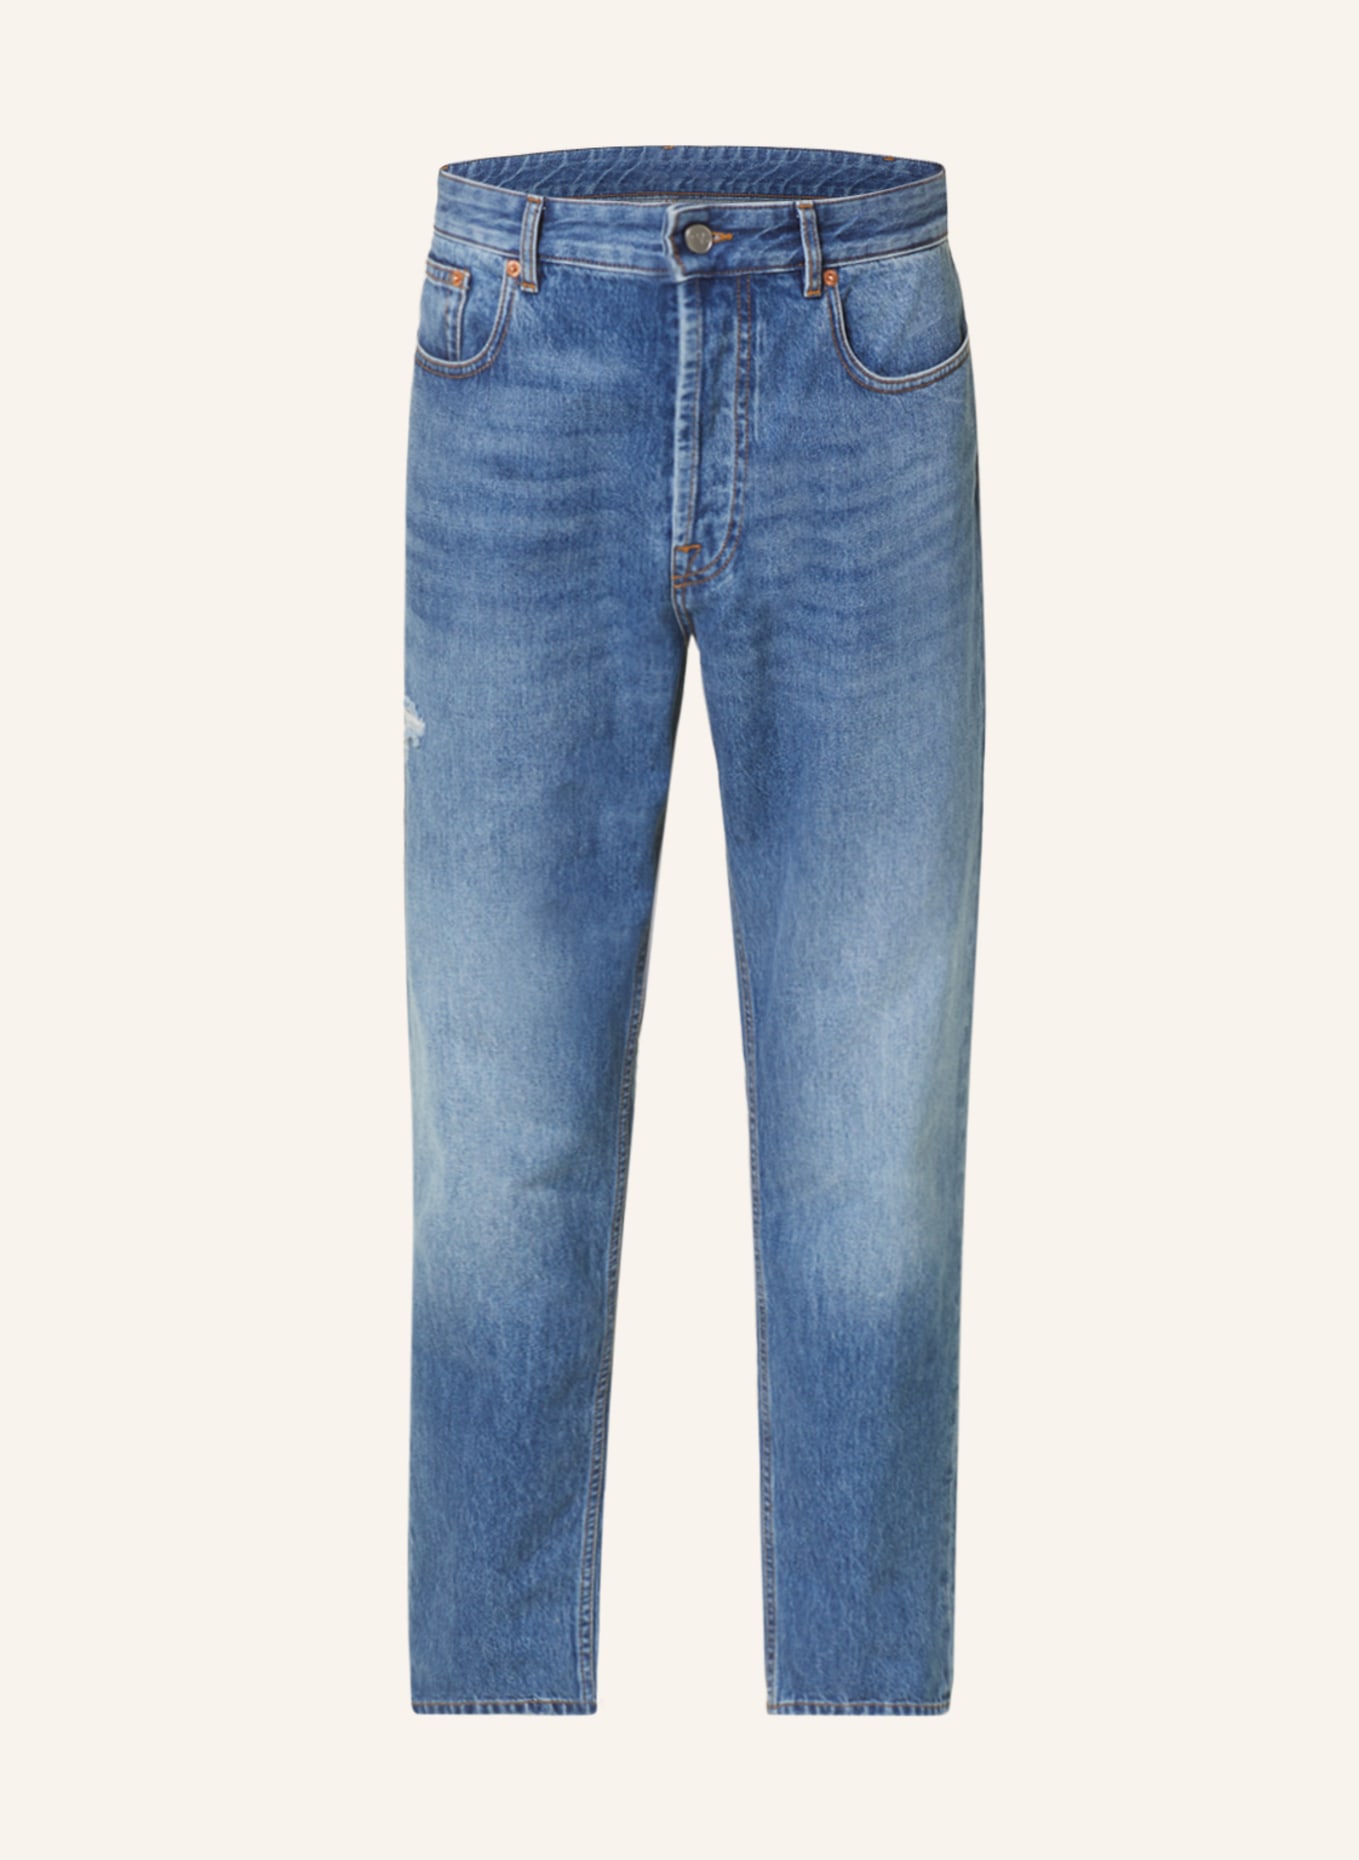 VALENTINO Jeans Regular Fit, Farbe: 558 MEDIUM BLUE DENIM (Bild 1)